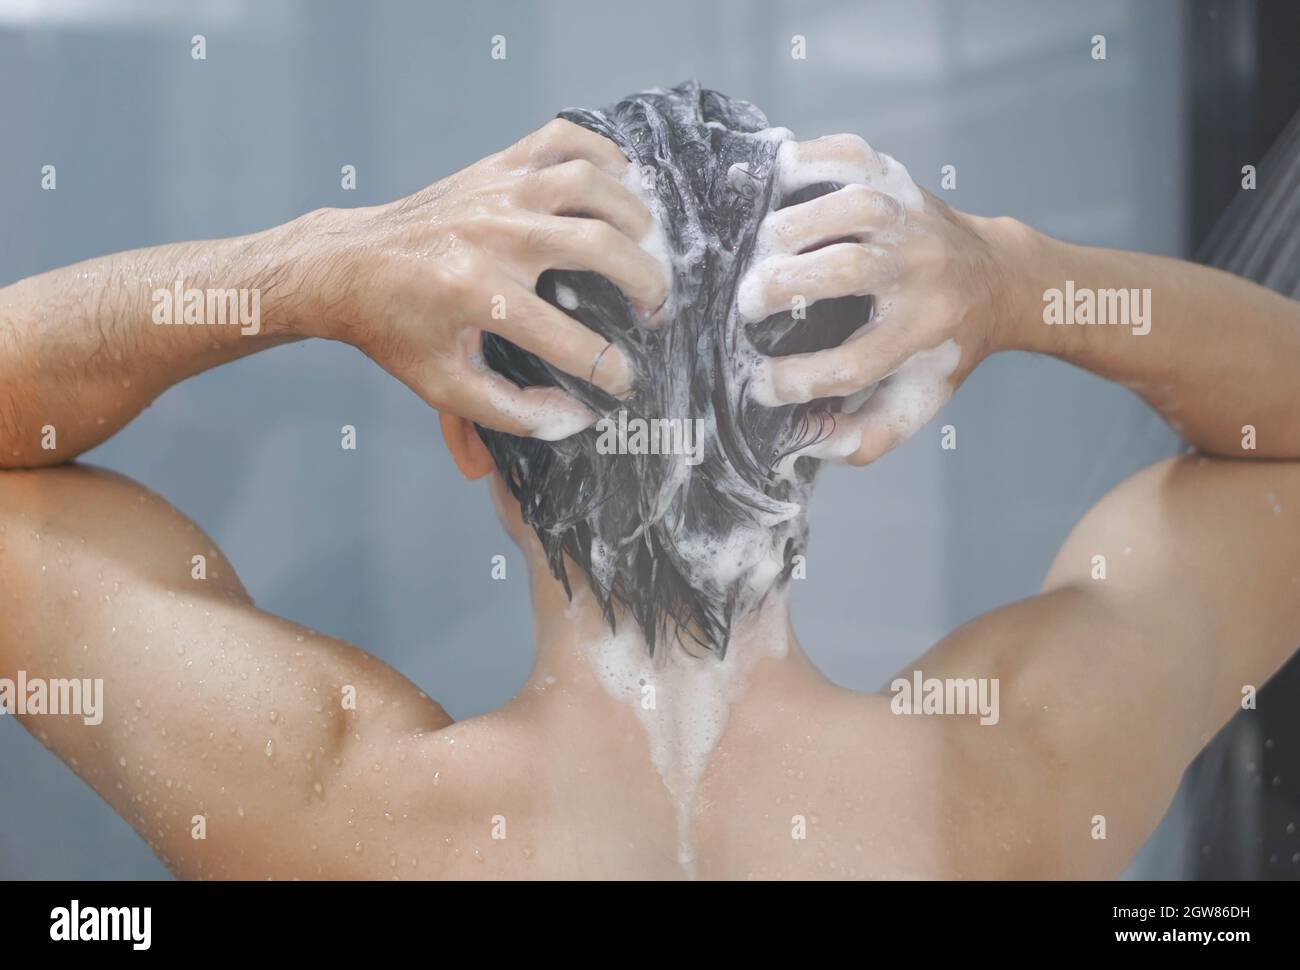 Rear View Of Man Washing Hair While Bathing Stock Photo